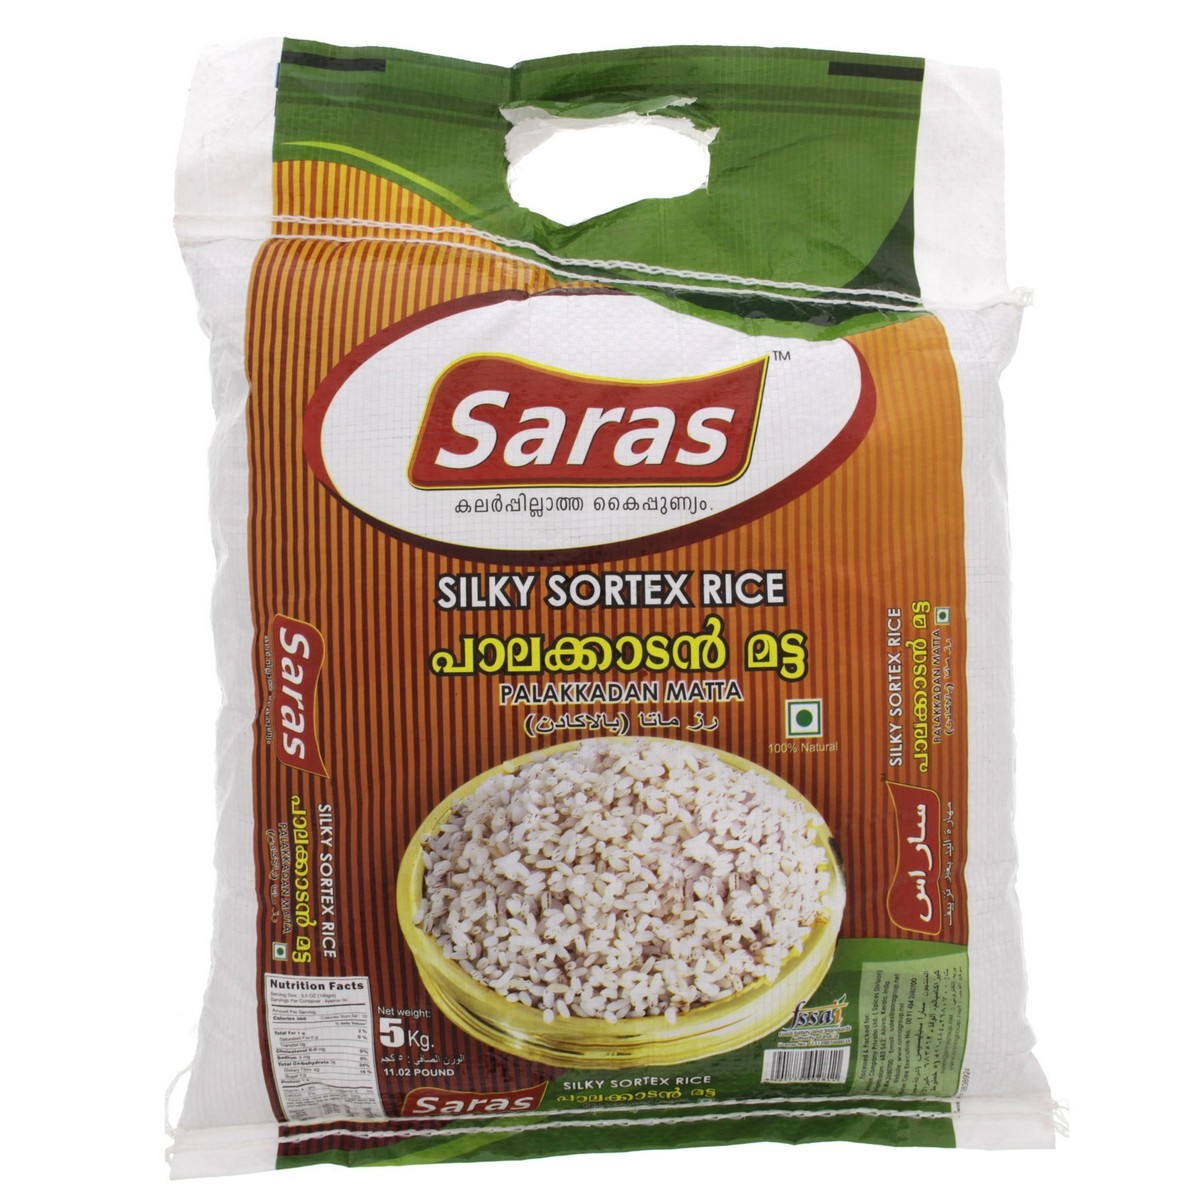 Saras Silky Sortex Rice 5kg